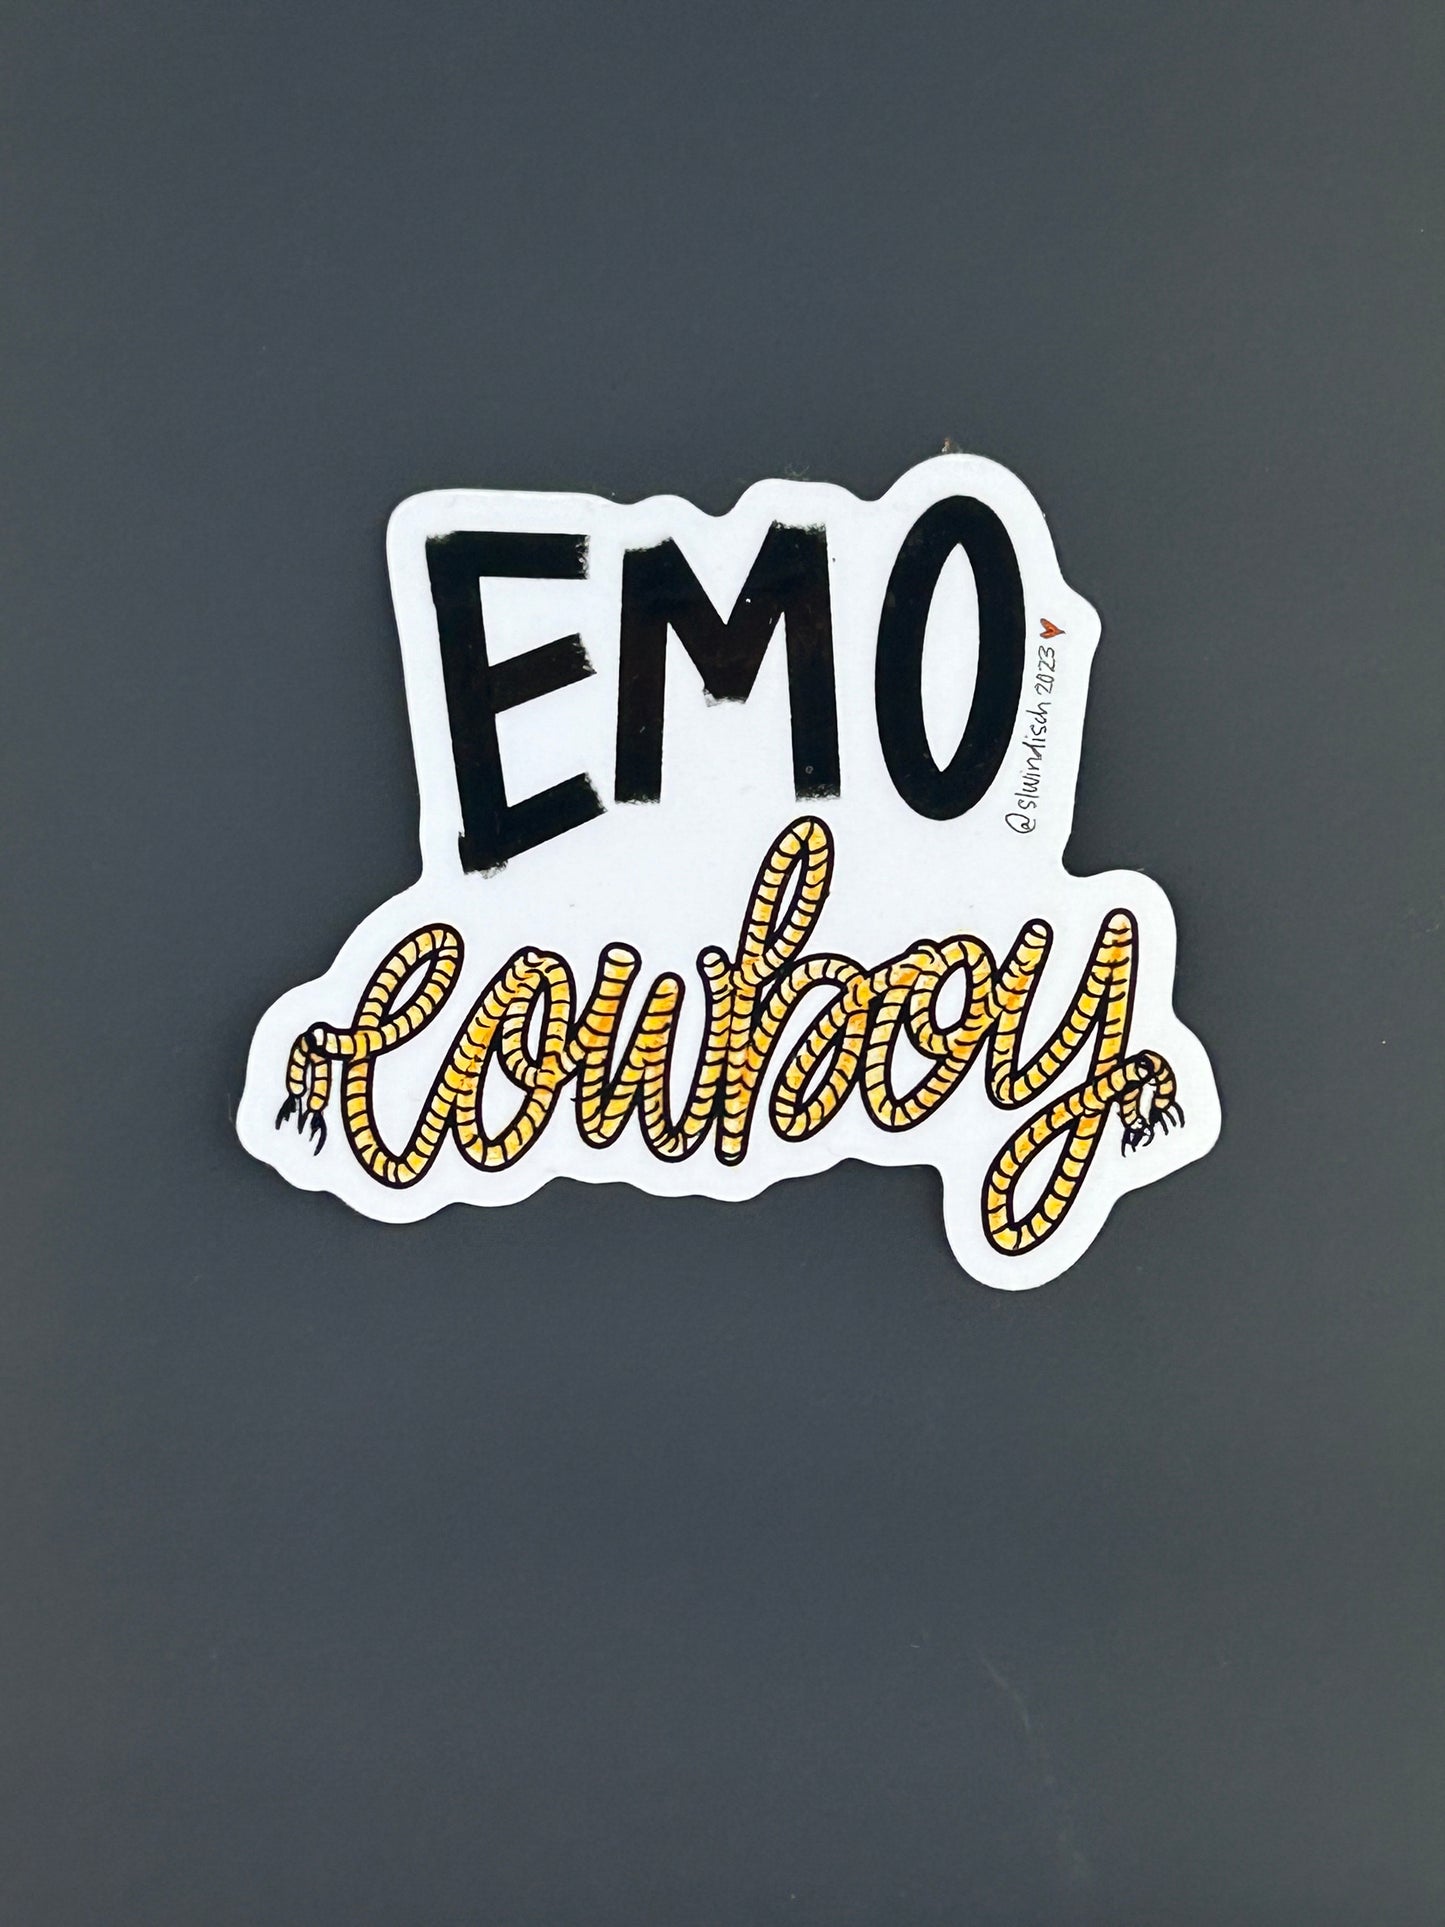 Emo Cowfolk Stickers